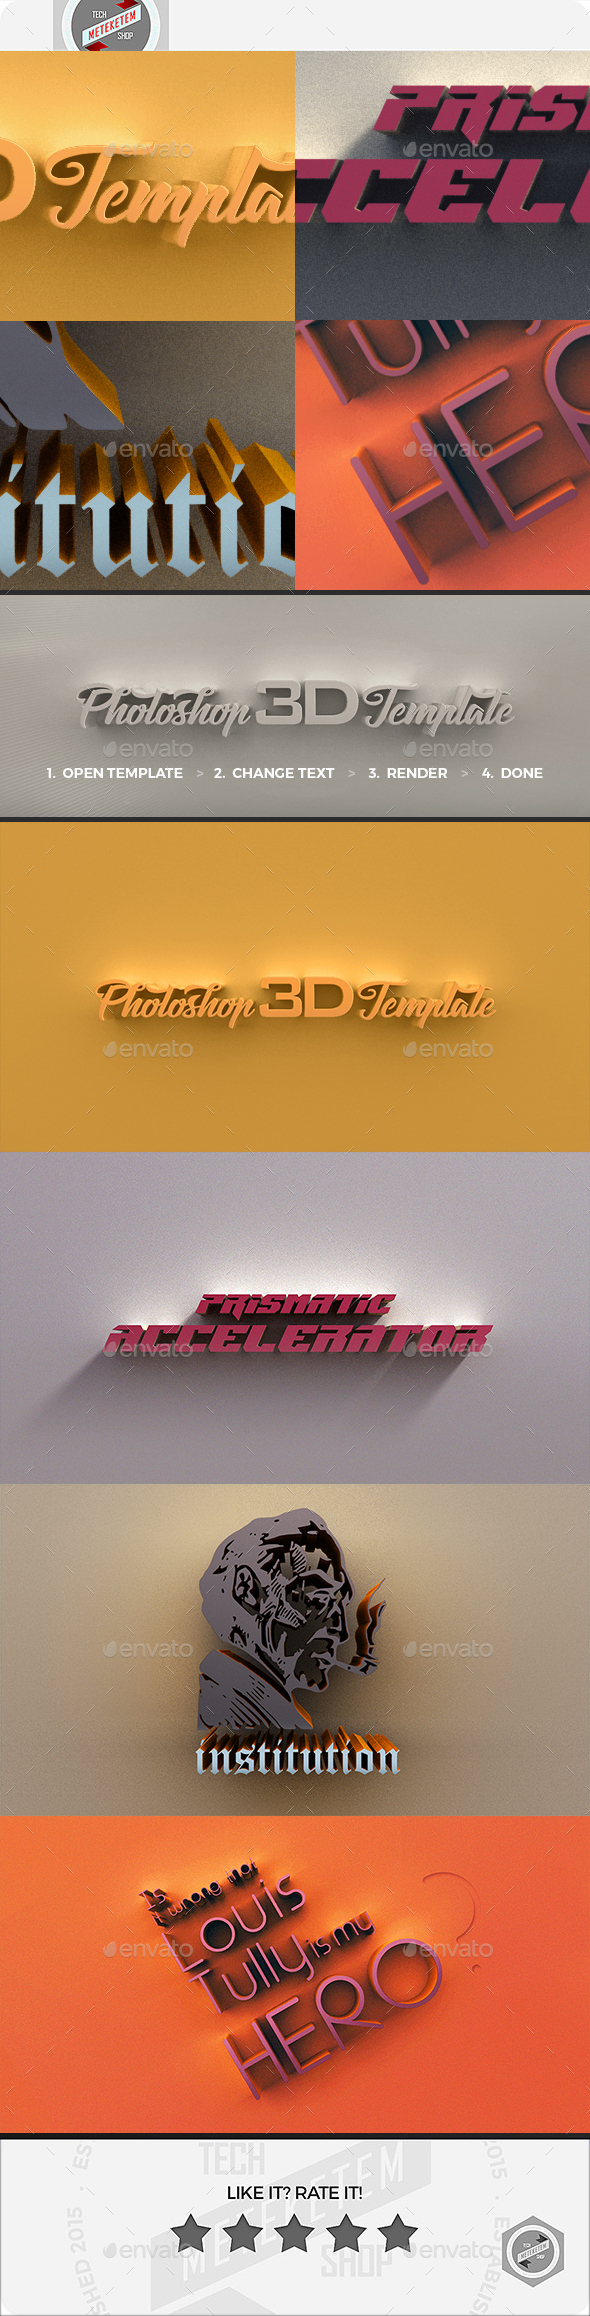 3D Photoshop Template 3